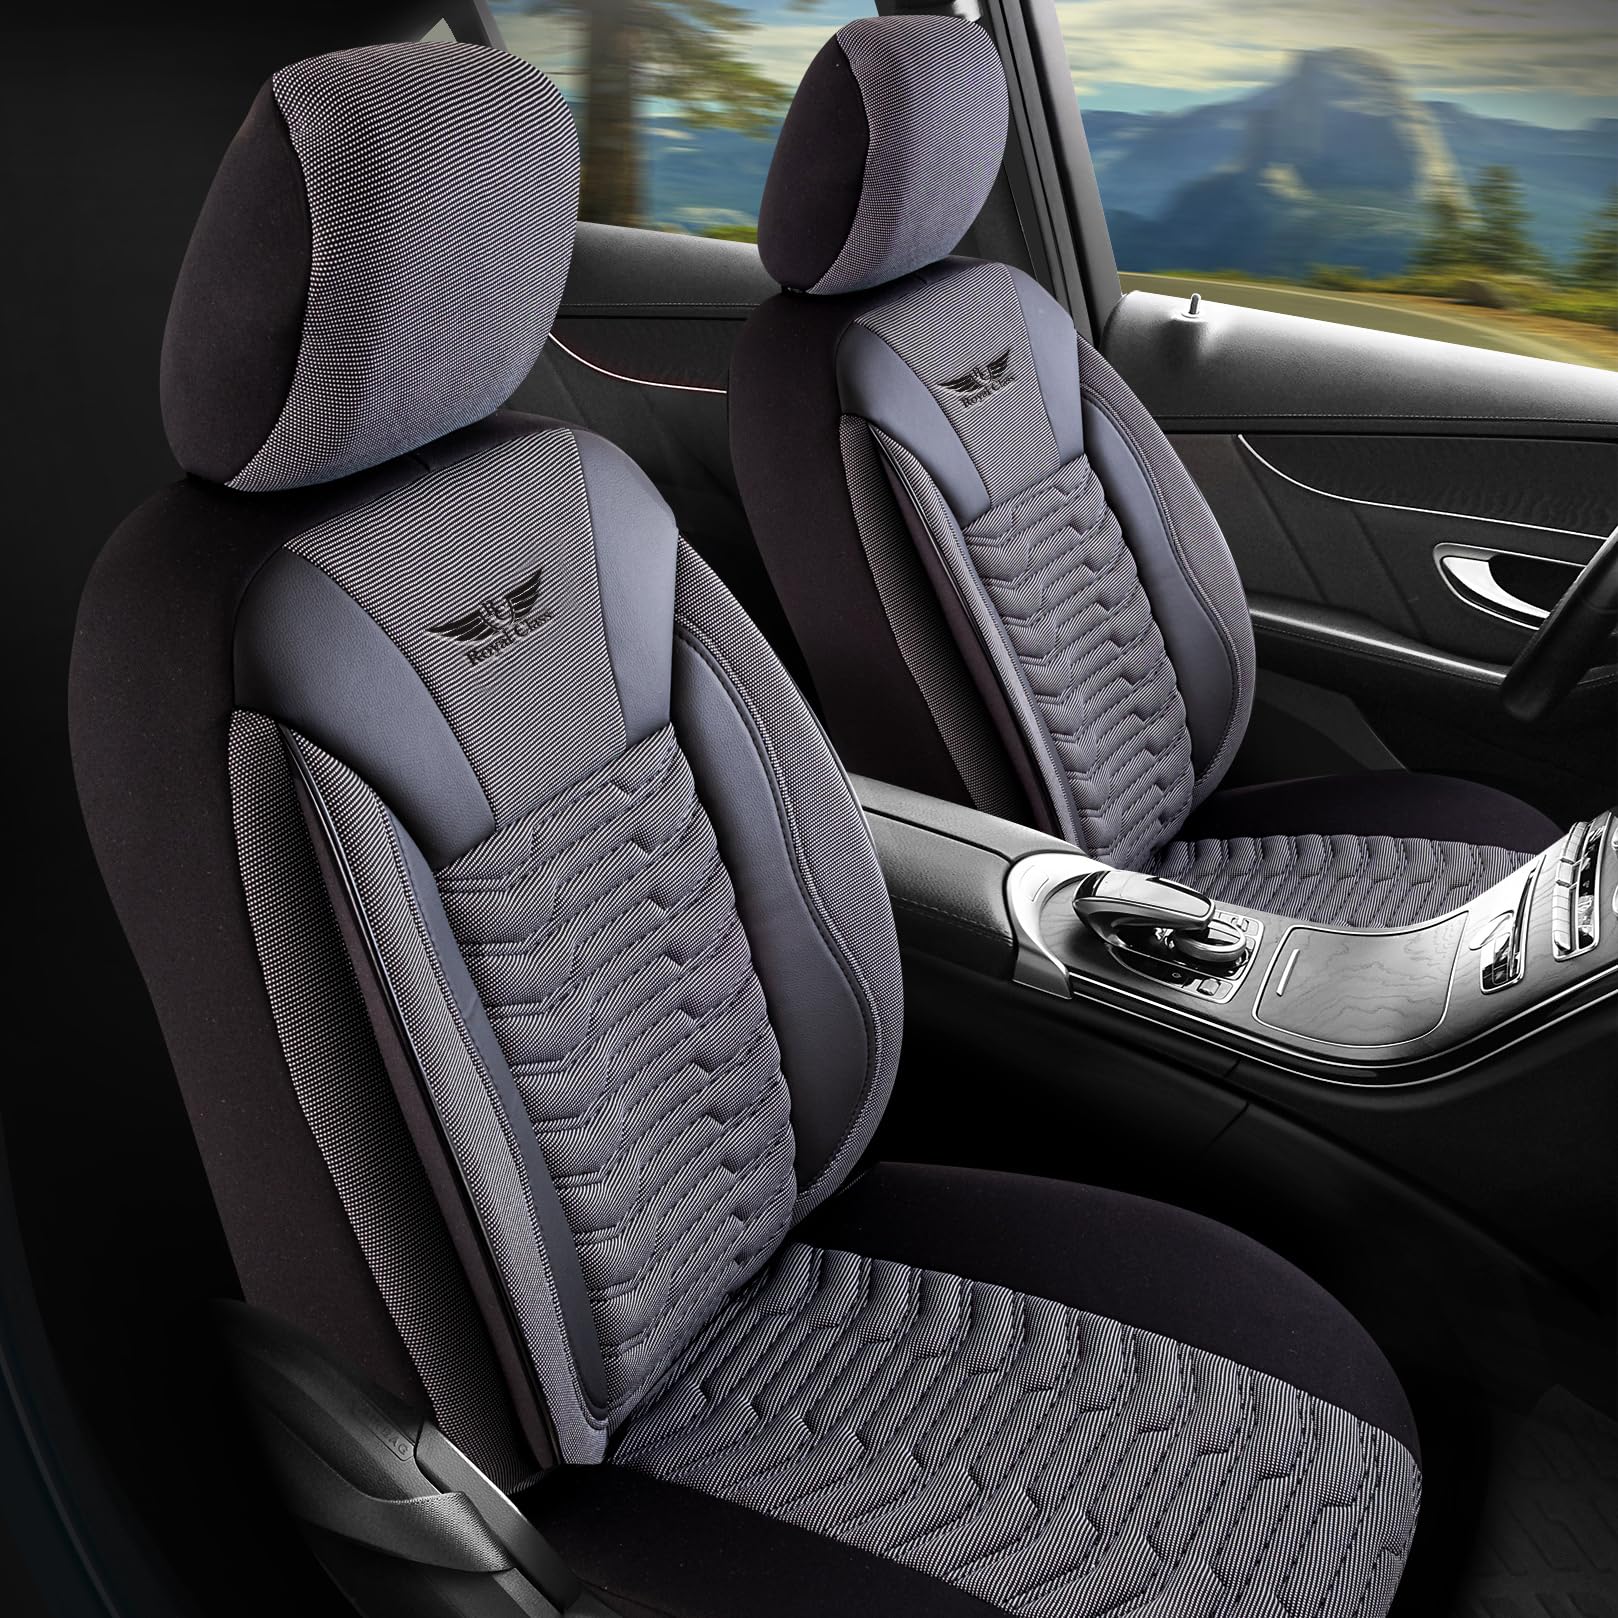 Royal Class Auto Sitzbezüge kompatibel für Honda Jazz in Dark Grau Komplett Fahrer und Beifahrer mit Rücksitzbank, Autositzbezug Schonbezug Sitzbezug Komplettset 5-Sitze Kunstleder von RC Royal Class